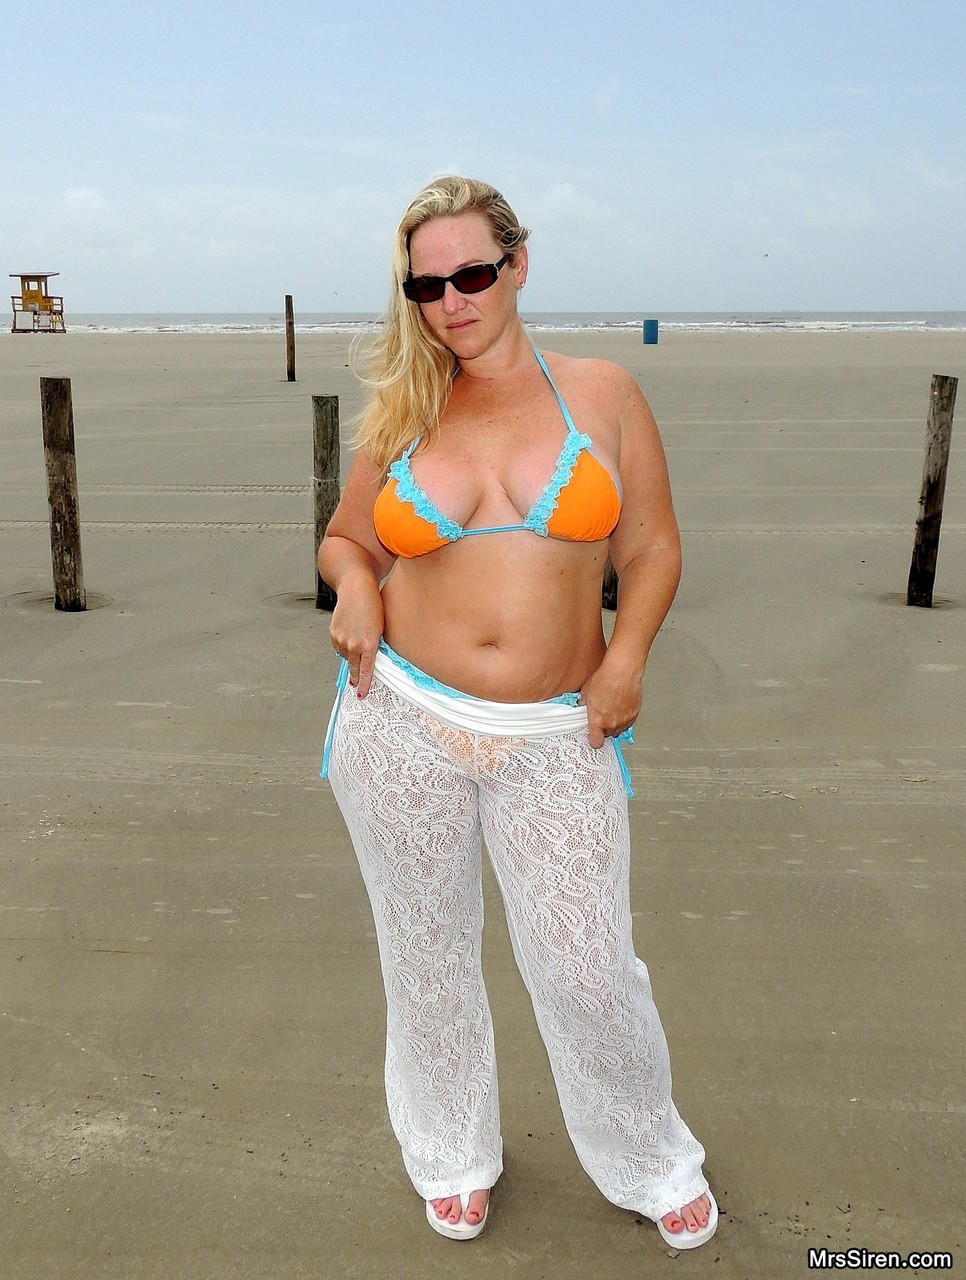 Short MILF Dee Siren strips on the beach & exposes her monster curves ポルノ写真 #425972297 | Mrs Siren Pics, Dee Siren, Chubby, モバイルポルノ